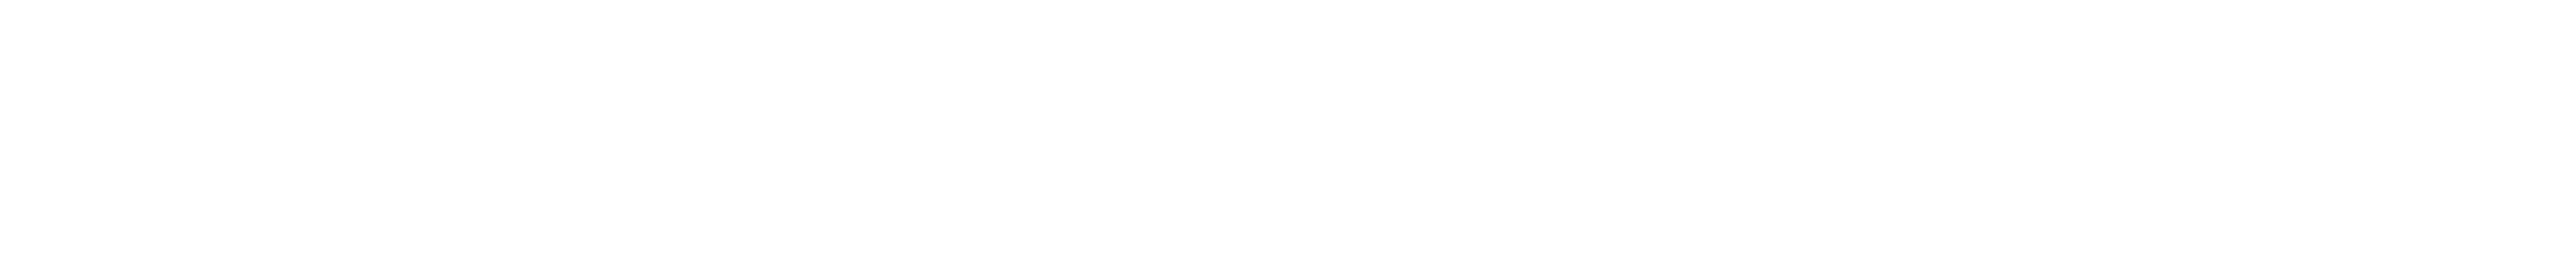 The Washington Post Logo - Syndication - The Washington Post